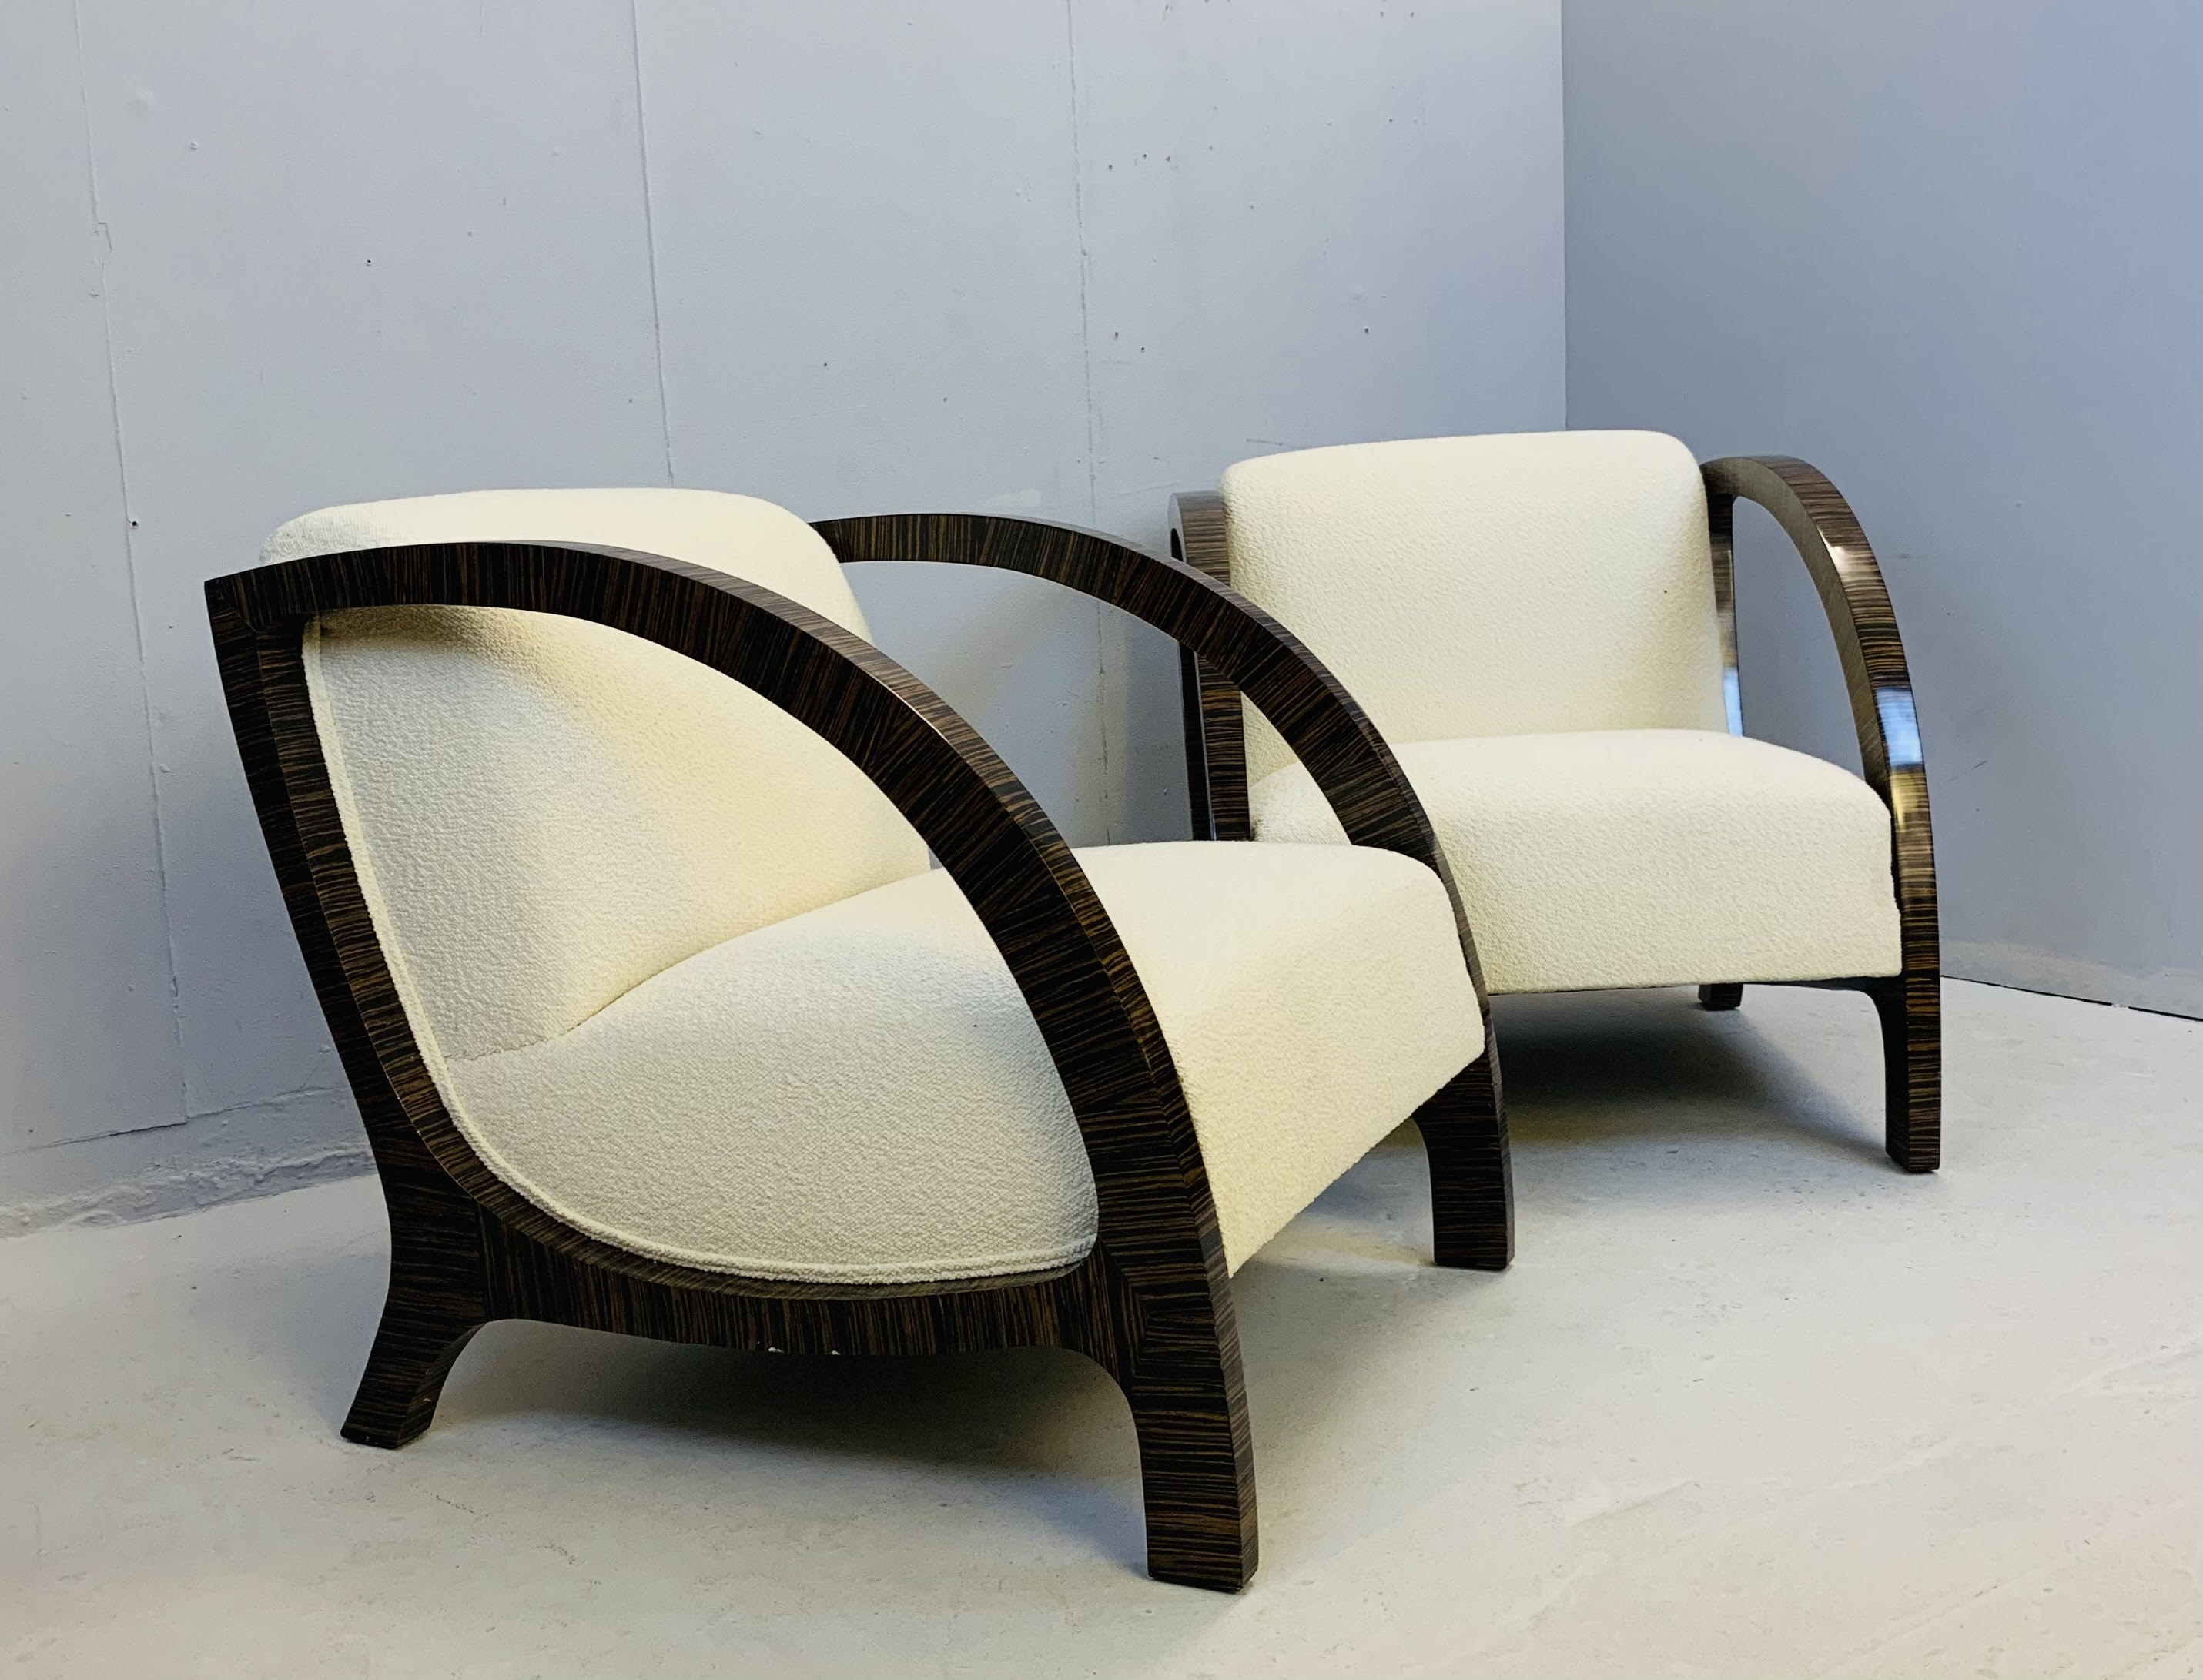 Pair of Art Deco Chairs.jpg